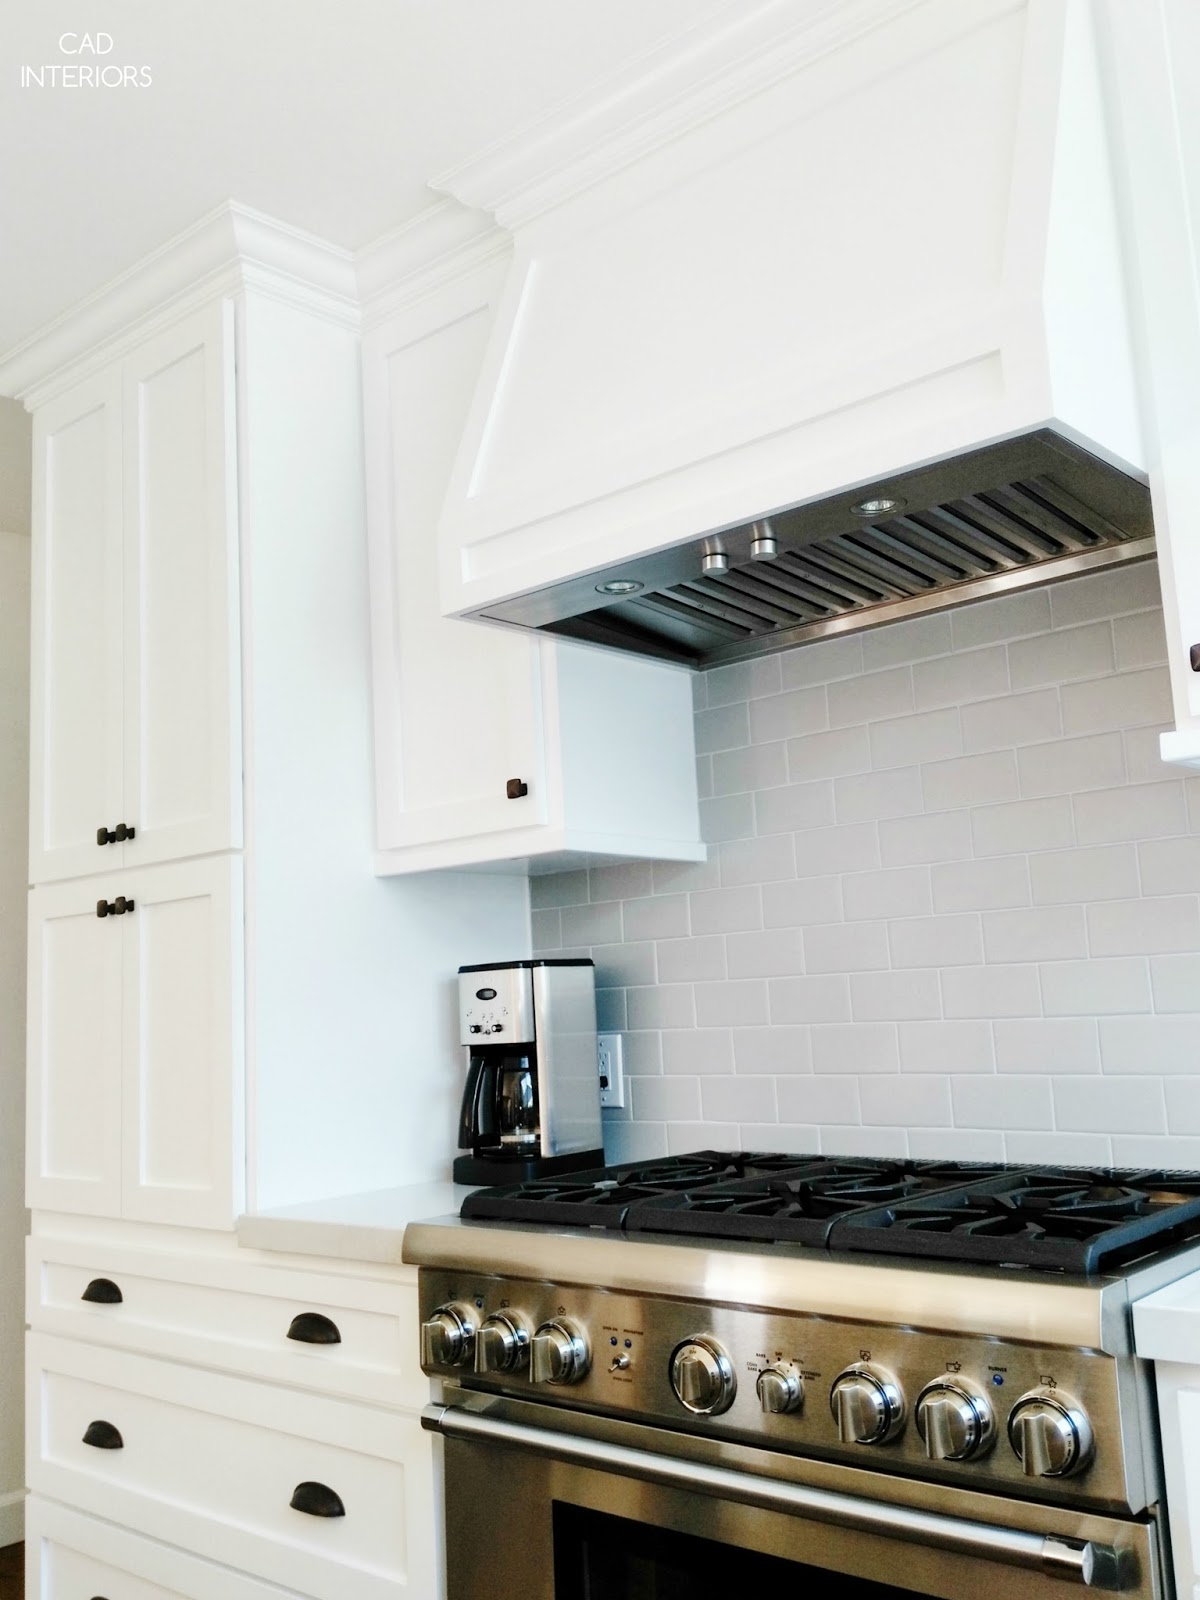 CAD INTERIORS kitchen renovation appliances